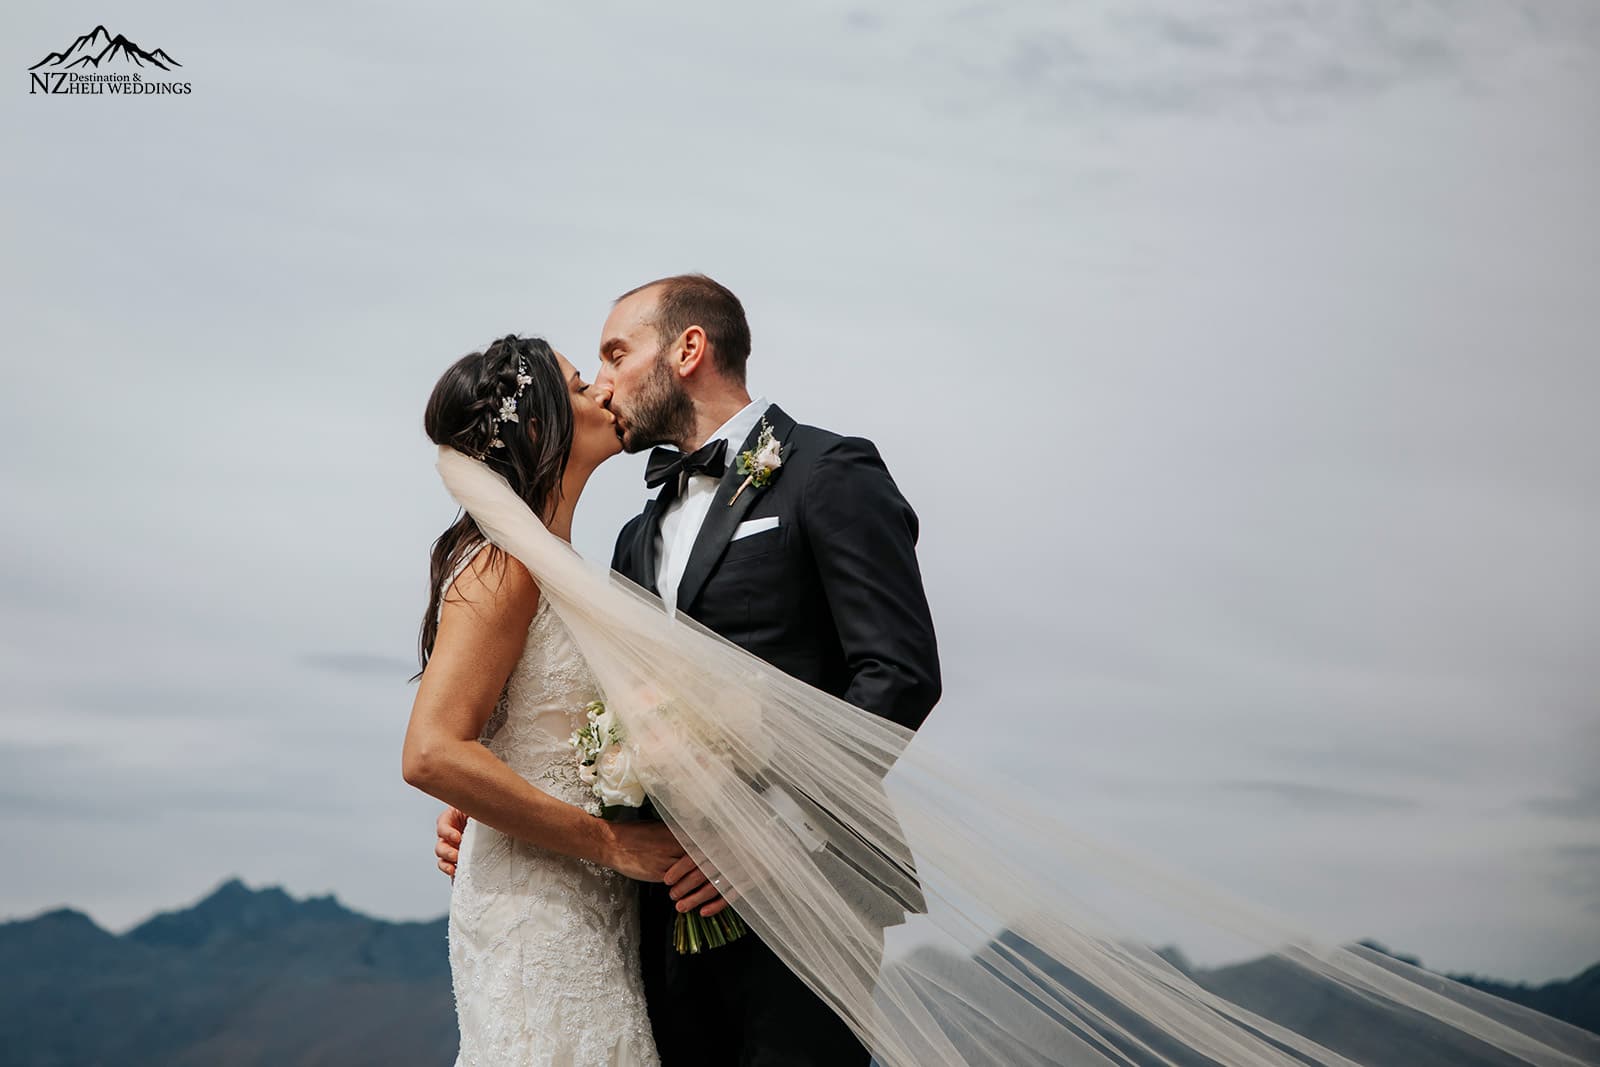 Heli Wedding on The Ledge in Queenstown New Zealand